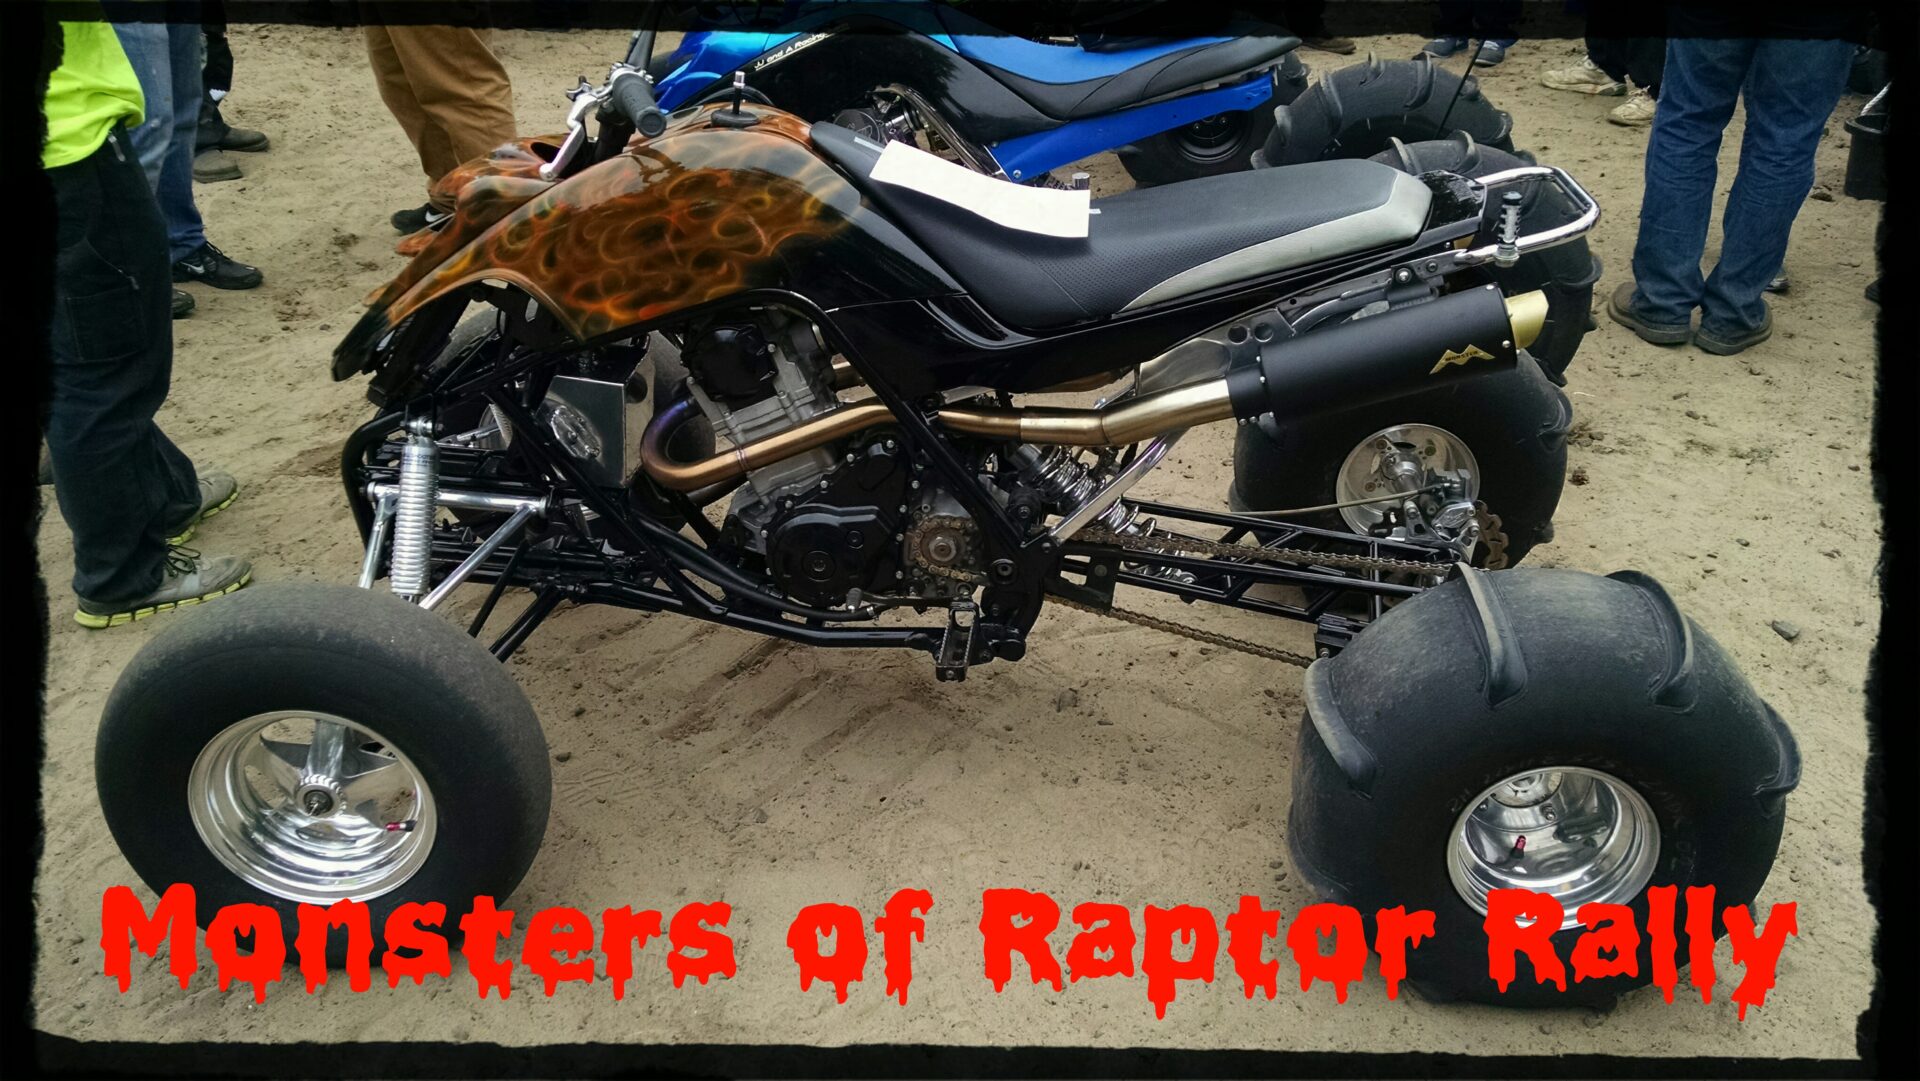 Monsters of Raptor Rally